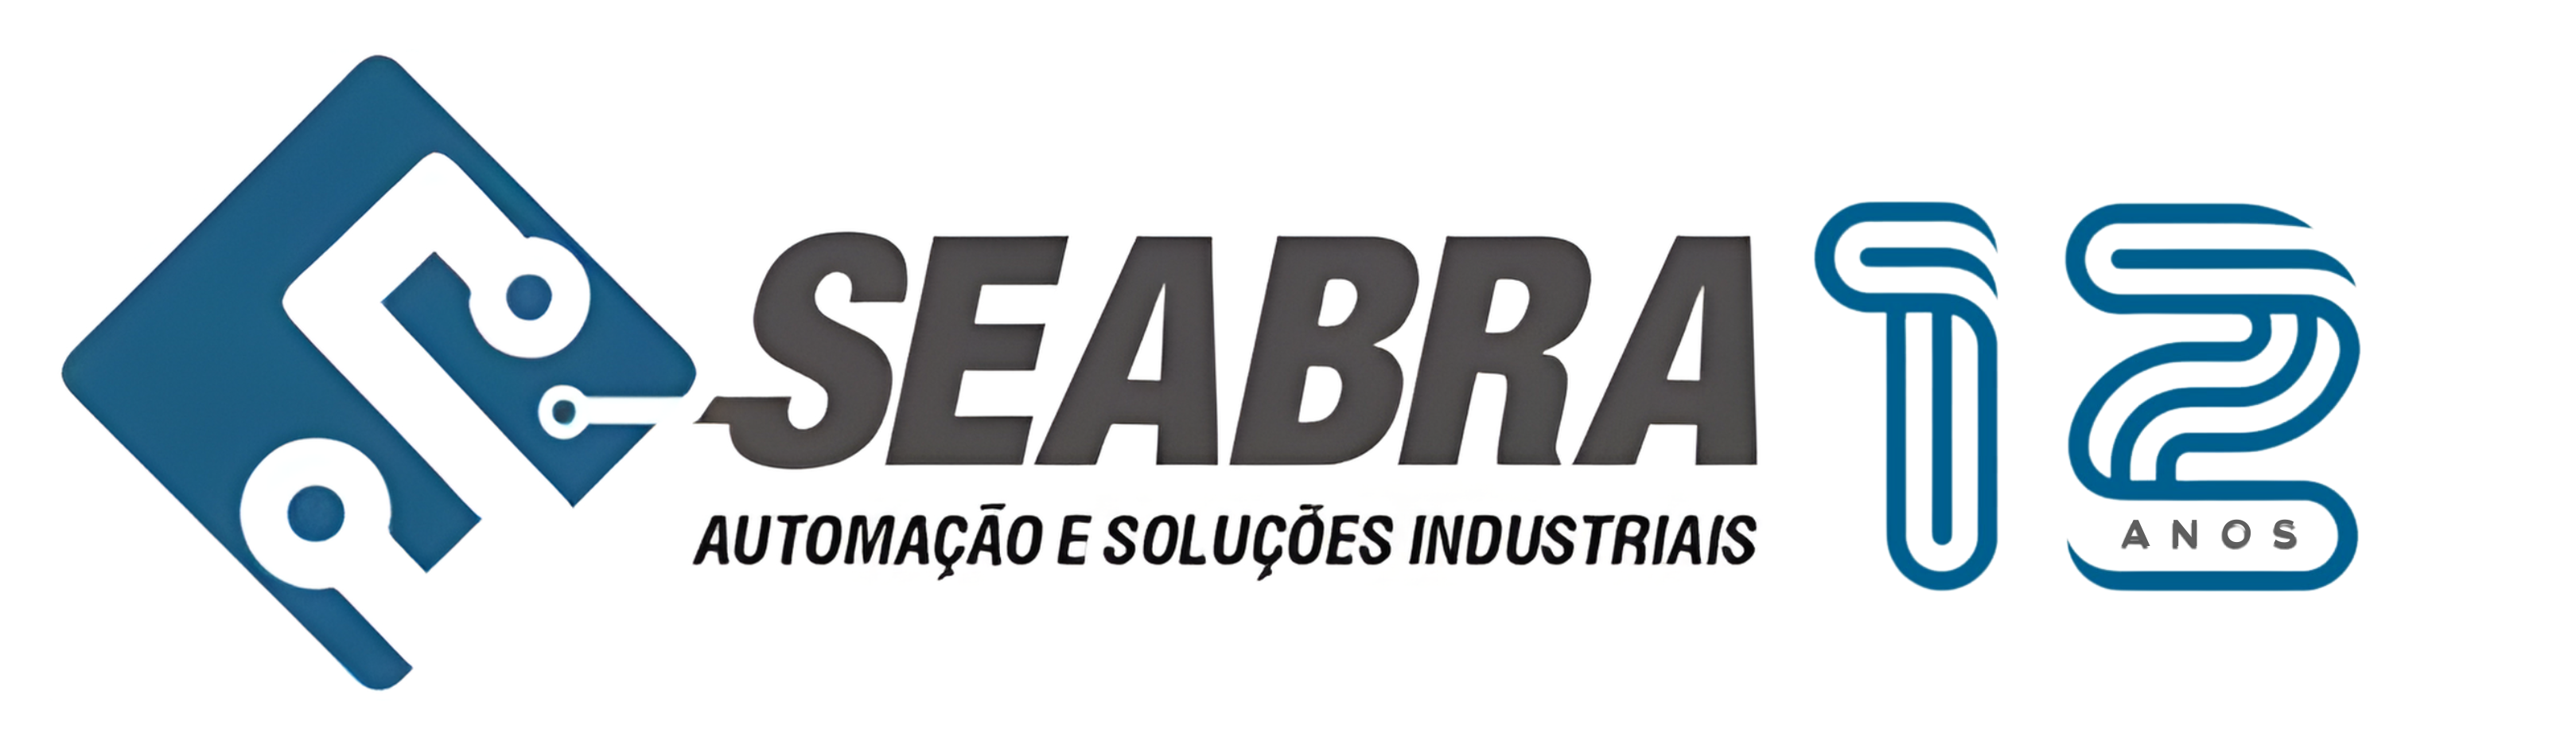 Seabra Automação Industrial - Logomarca